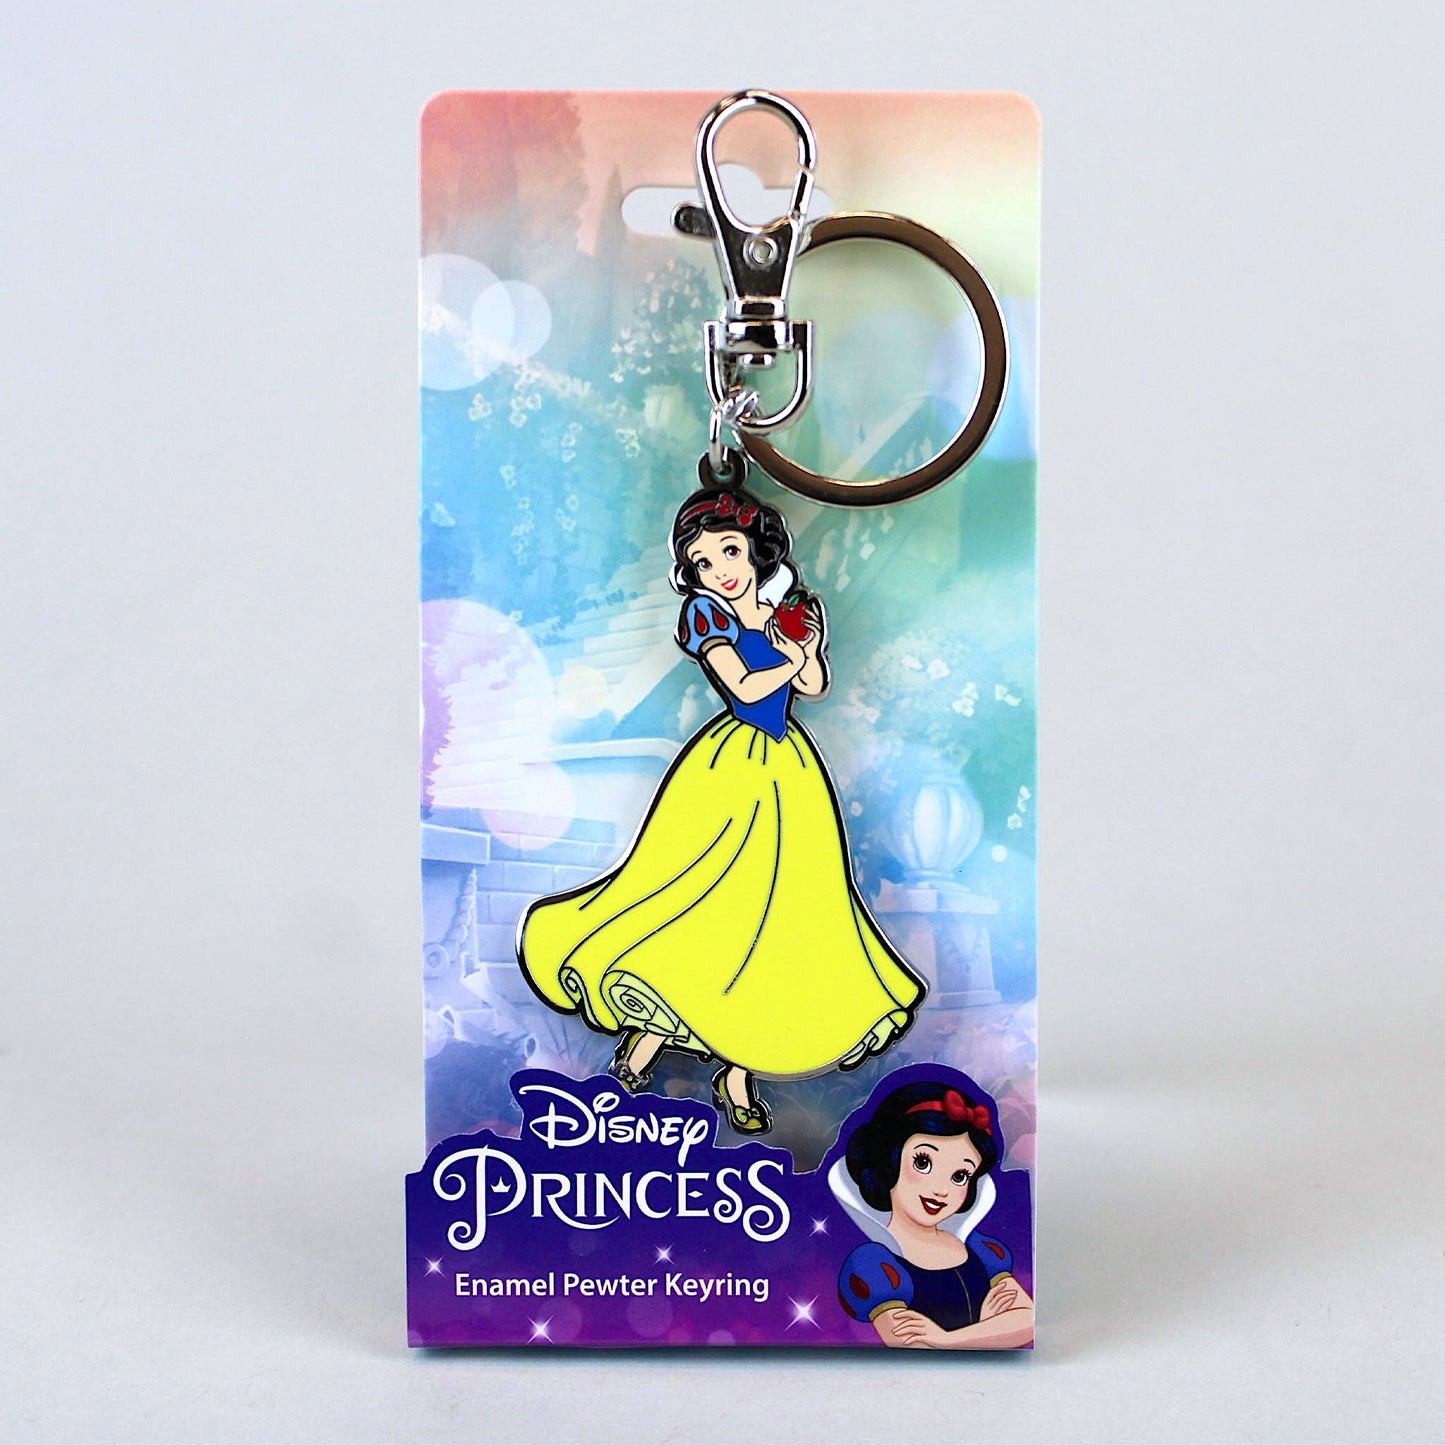 Snow White (Snow White and the Seven Dwarfs) Disney Colored Enamel Keychain